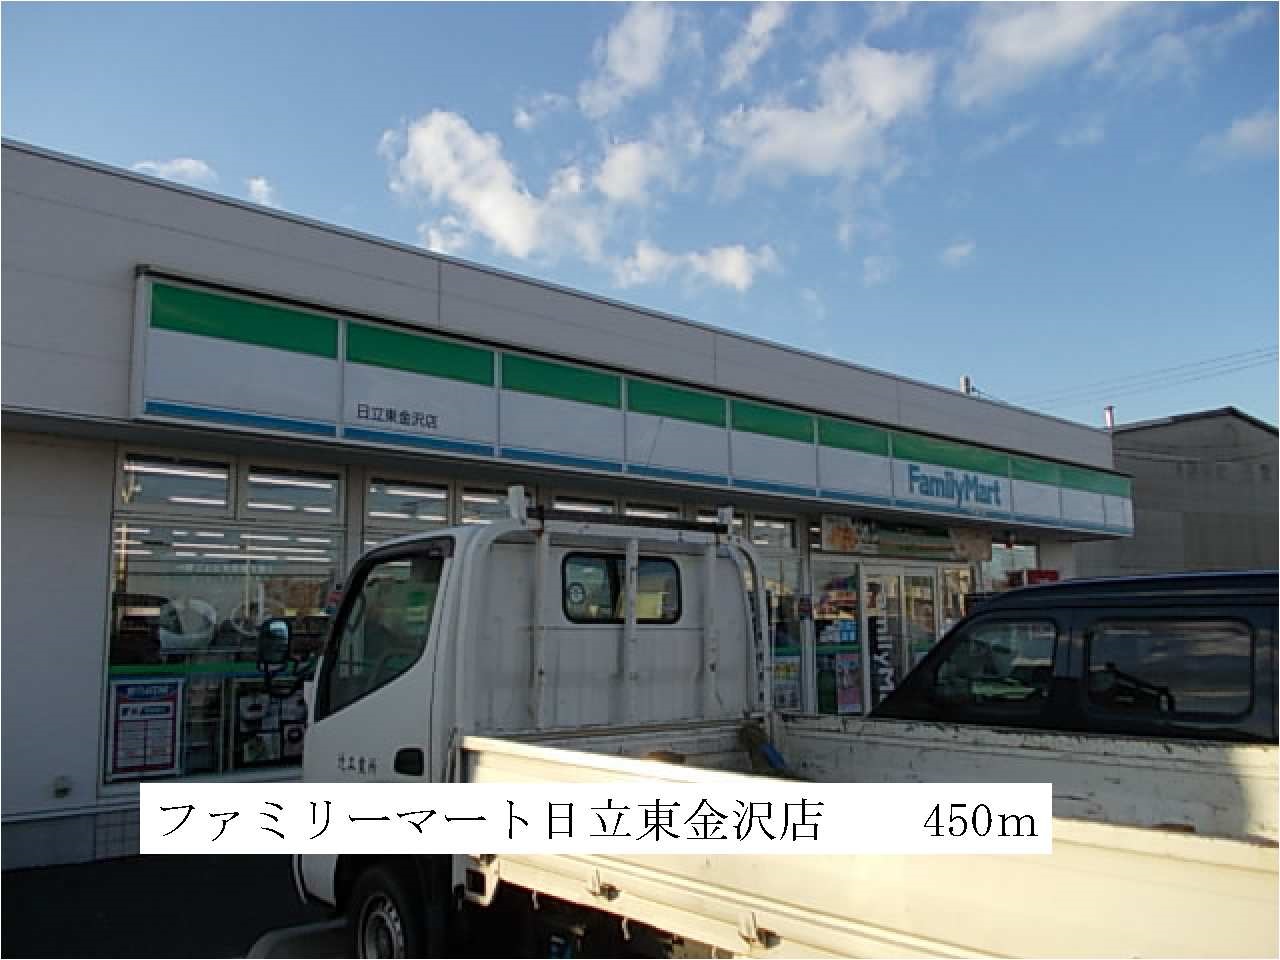 Convenience store. FamilyMart Hitachi Higashikanazawa store up (convenience store) 450m